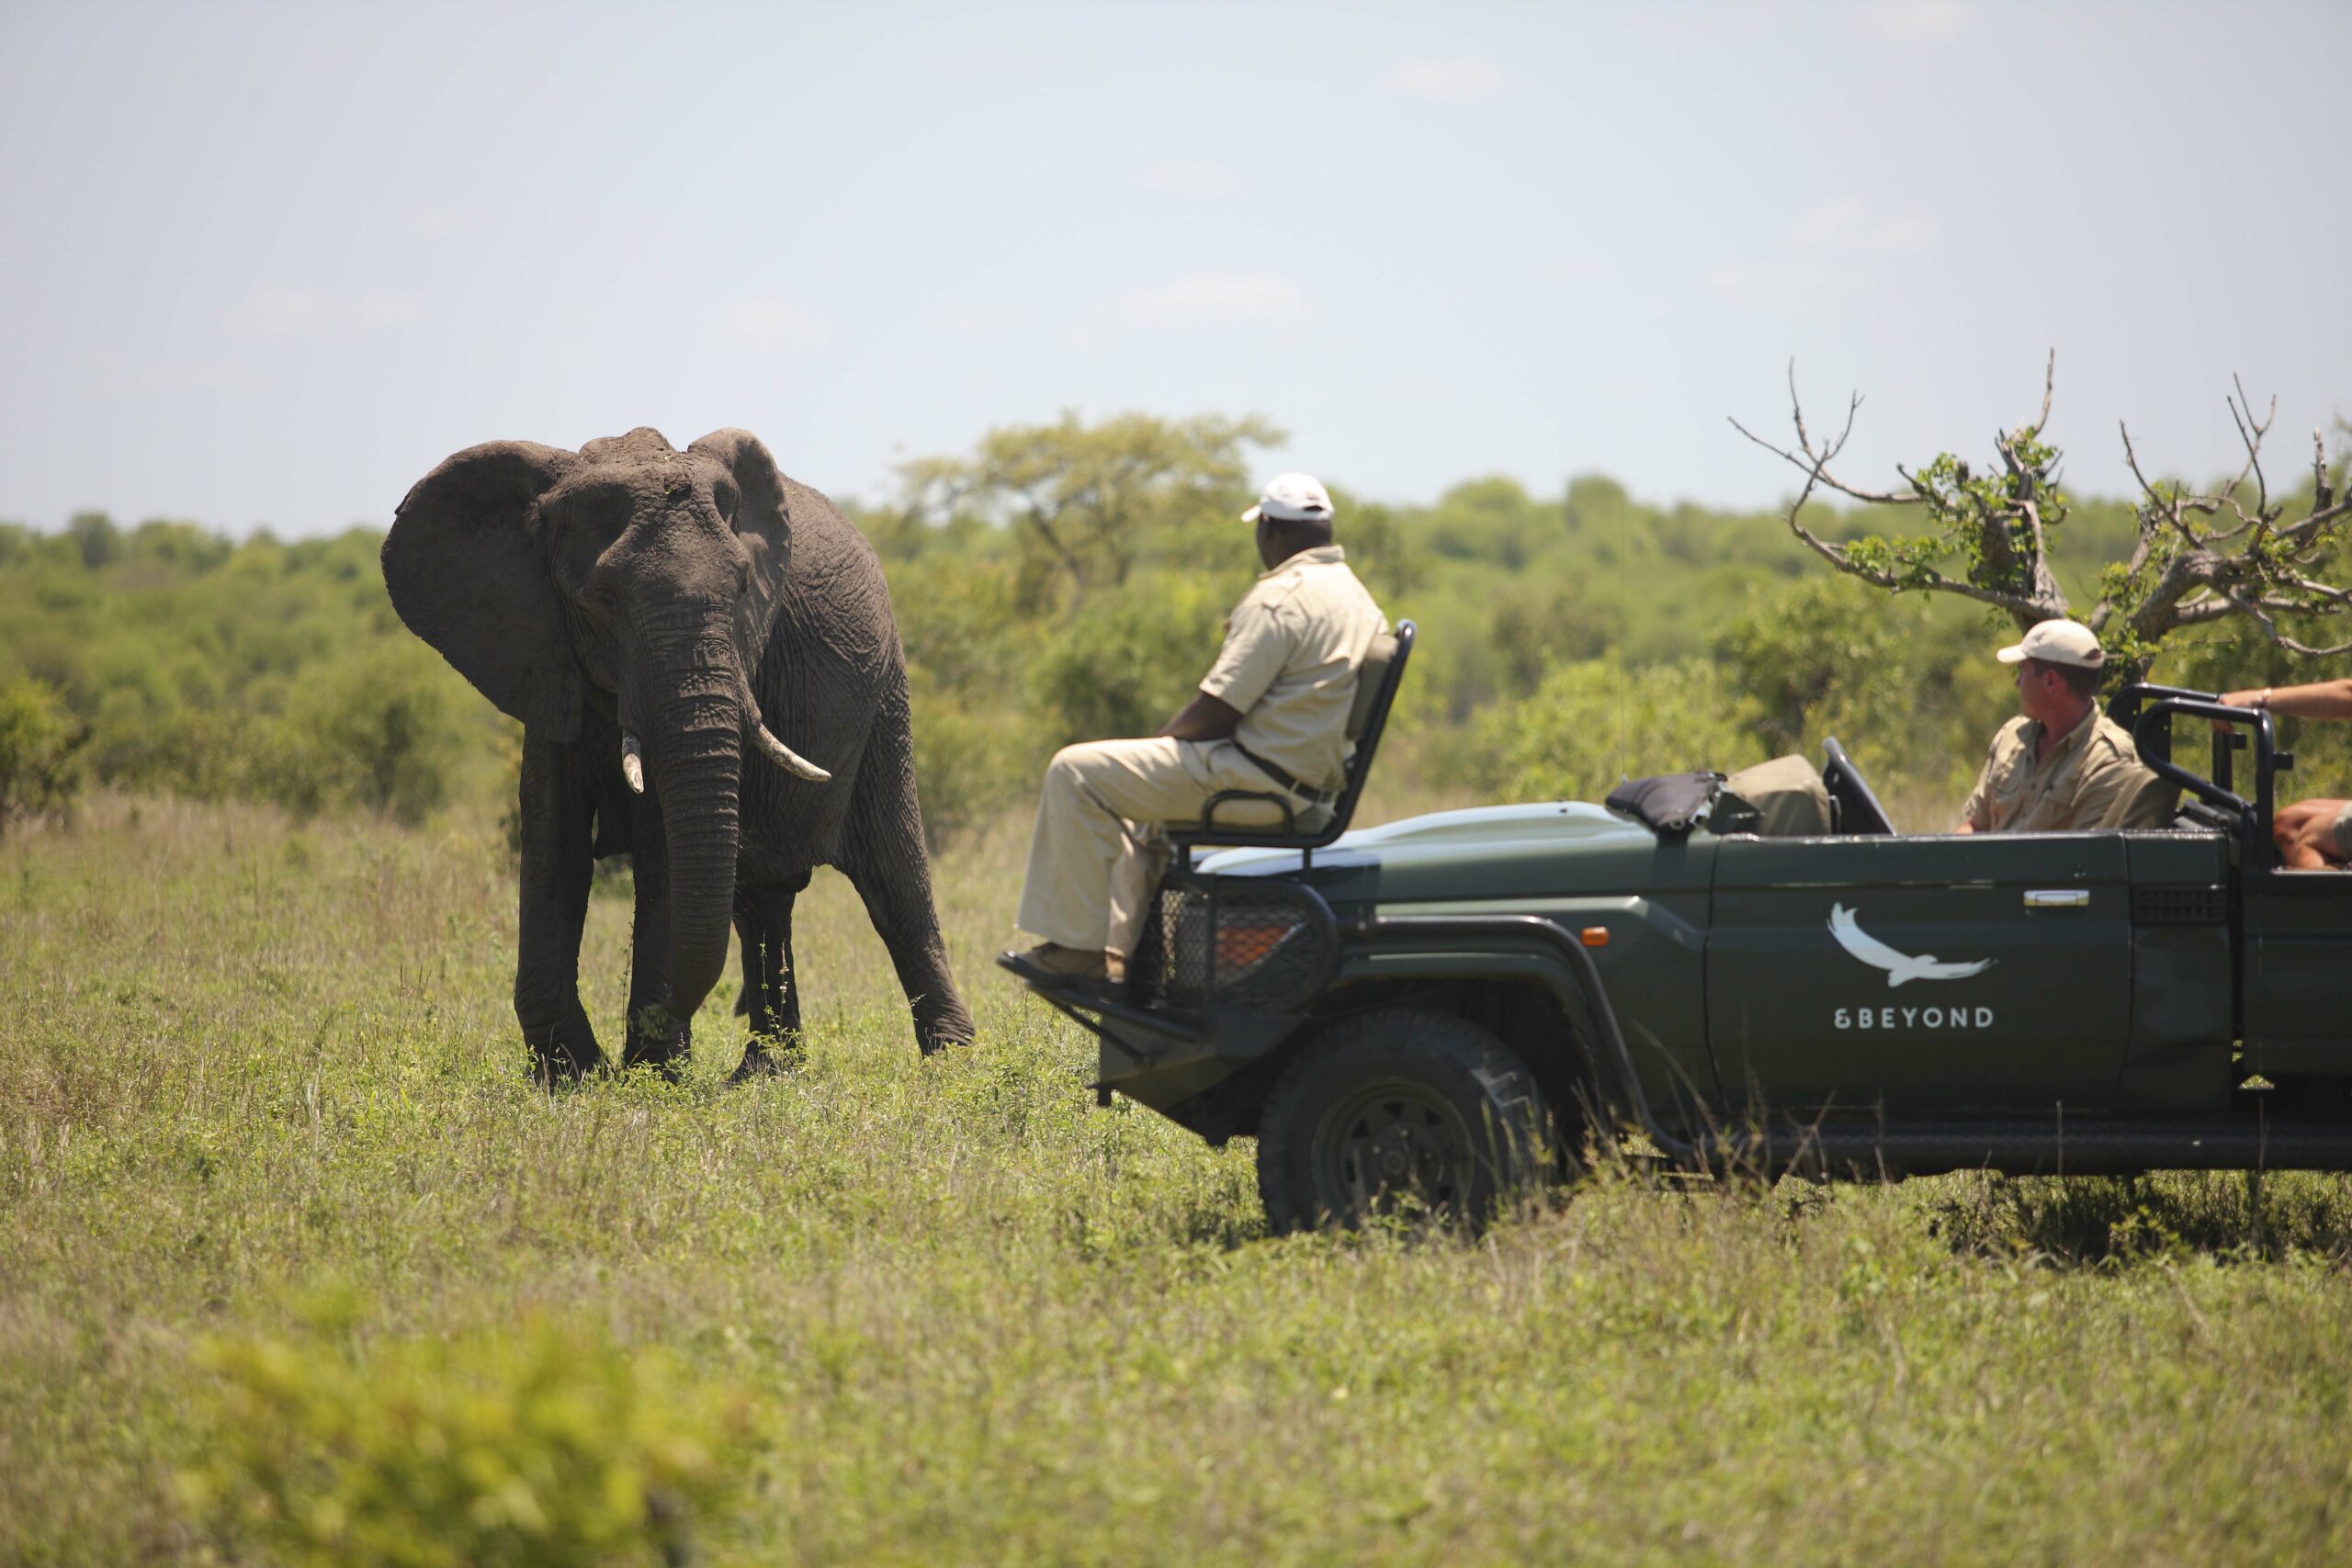 Elephant on Safari in Africa